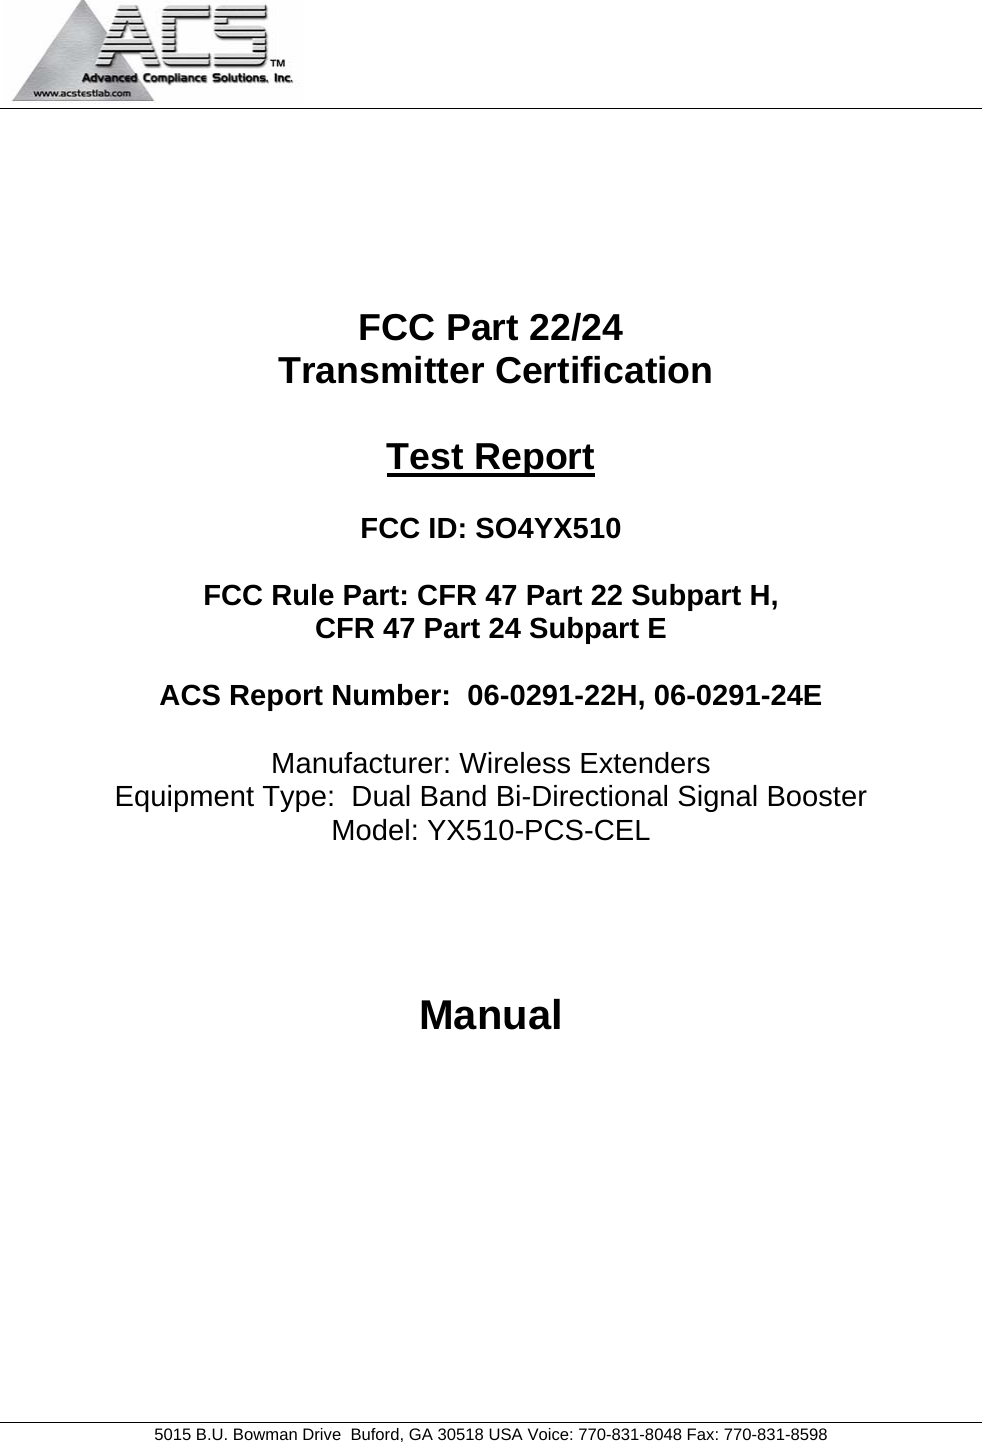                                            5015 B.U. Bowman Drive  Buford, GA 30518 USA Voice: 770-831-8048 Fax: 770-831-8598       FCC Part 22/24  Transmitter Certification  Test Report  FCC ID: SO4YX510  FCC Rule Part: CFR 47 Part 22 Subpart H, CFR 47 Part 24 Subpart E  ACS Report Number:  06-0291-22H, 06-0291-24E   Manufacturer: Wireless Extenders Equipment Type:  Dual Band Bi-Directional Signal Booster Model: YX510-PCS-CEL     Manual 